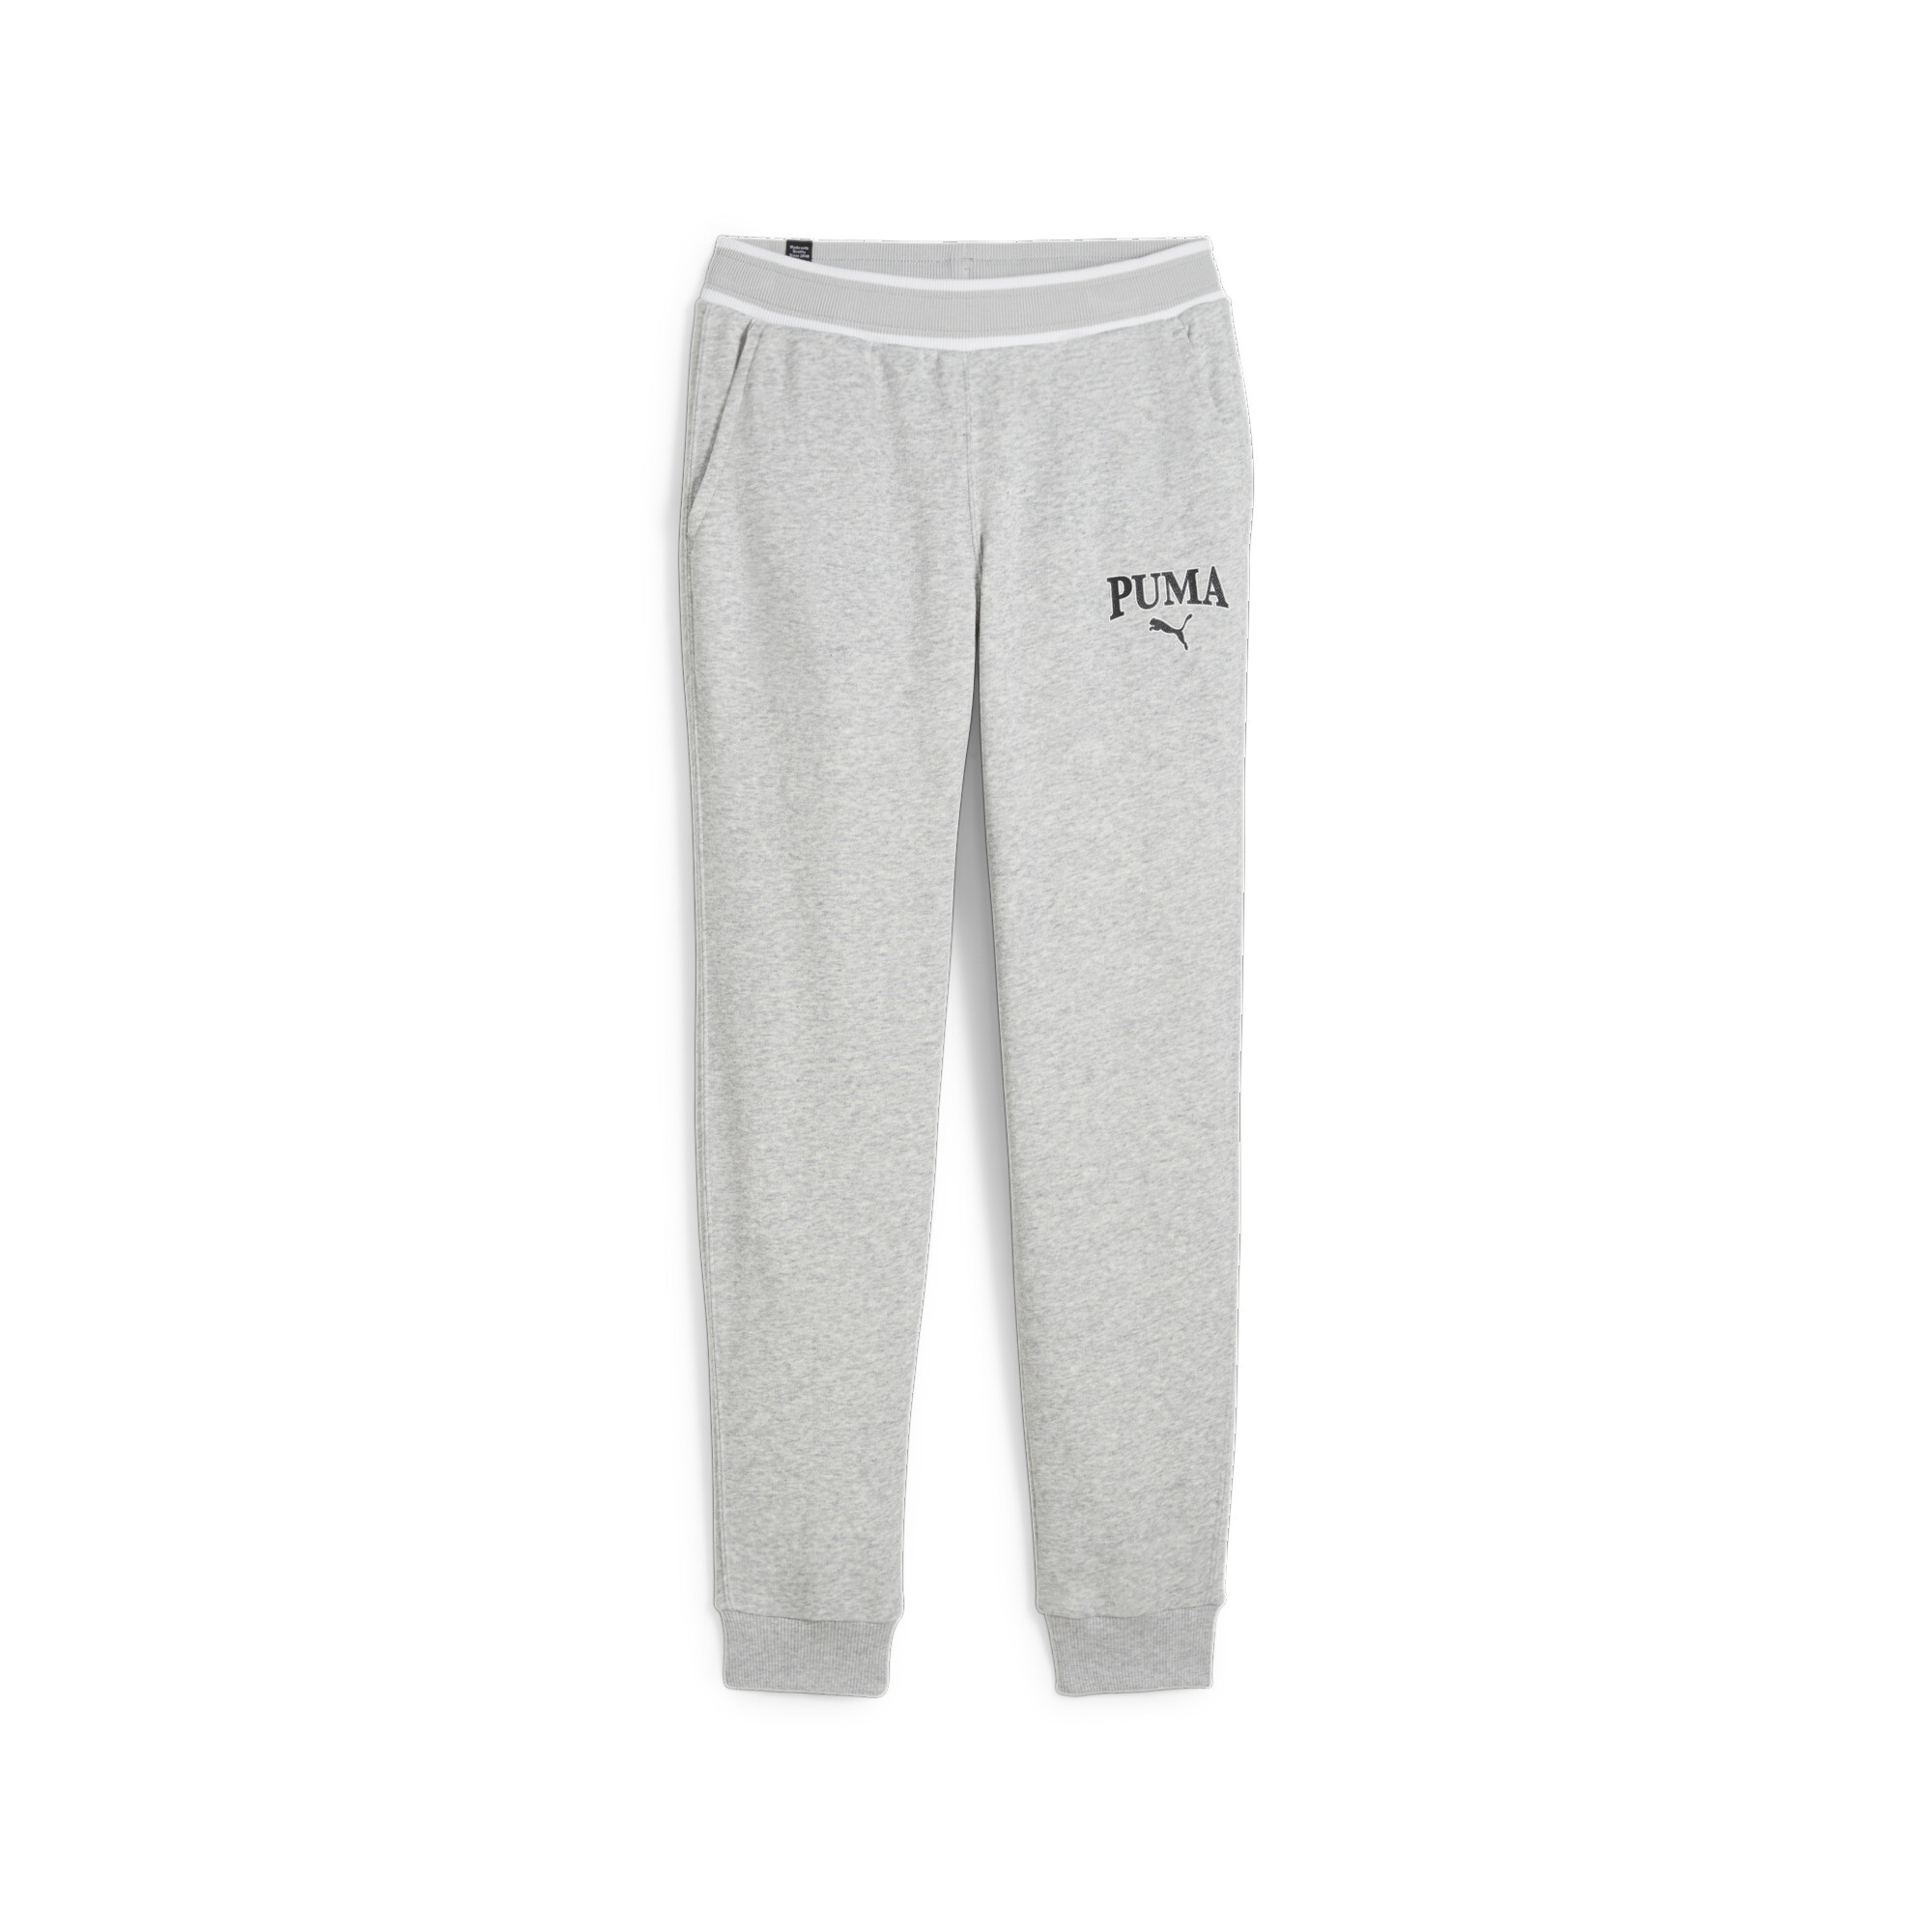 Men's Puma SQUAD Youth Sweatpants, Gray, Size 7-8Y, Age